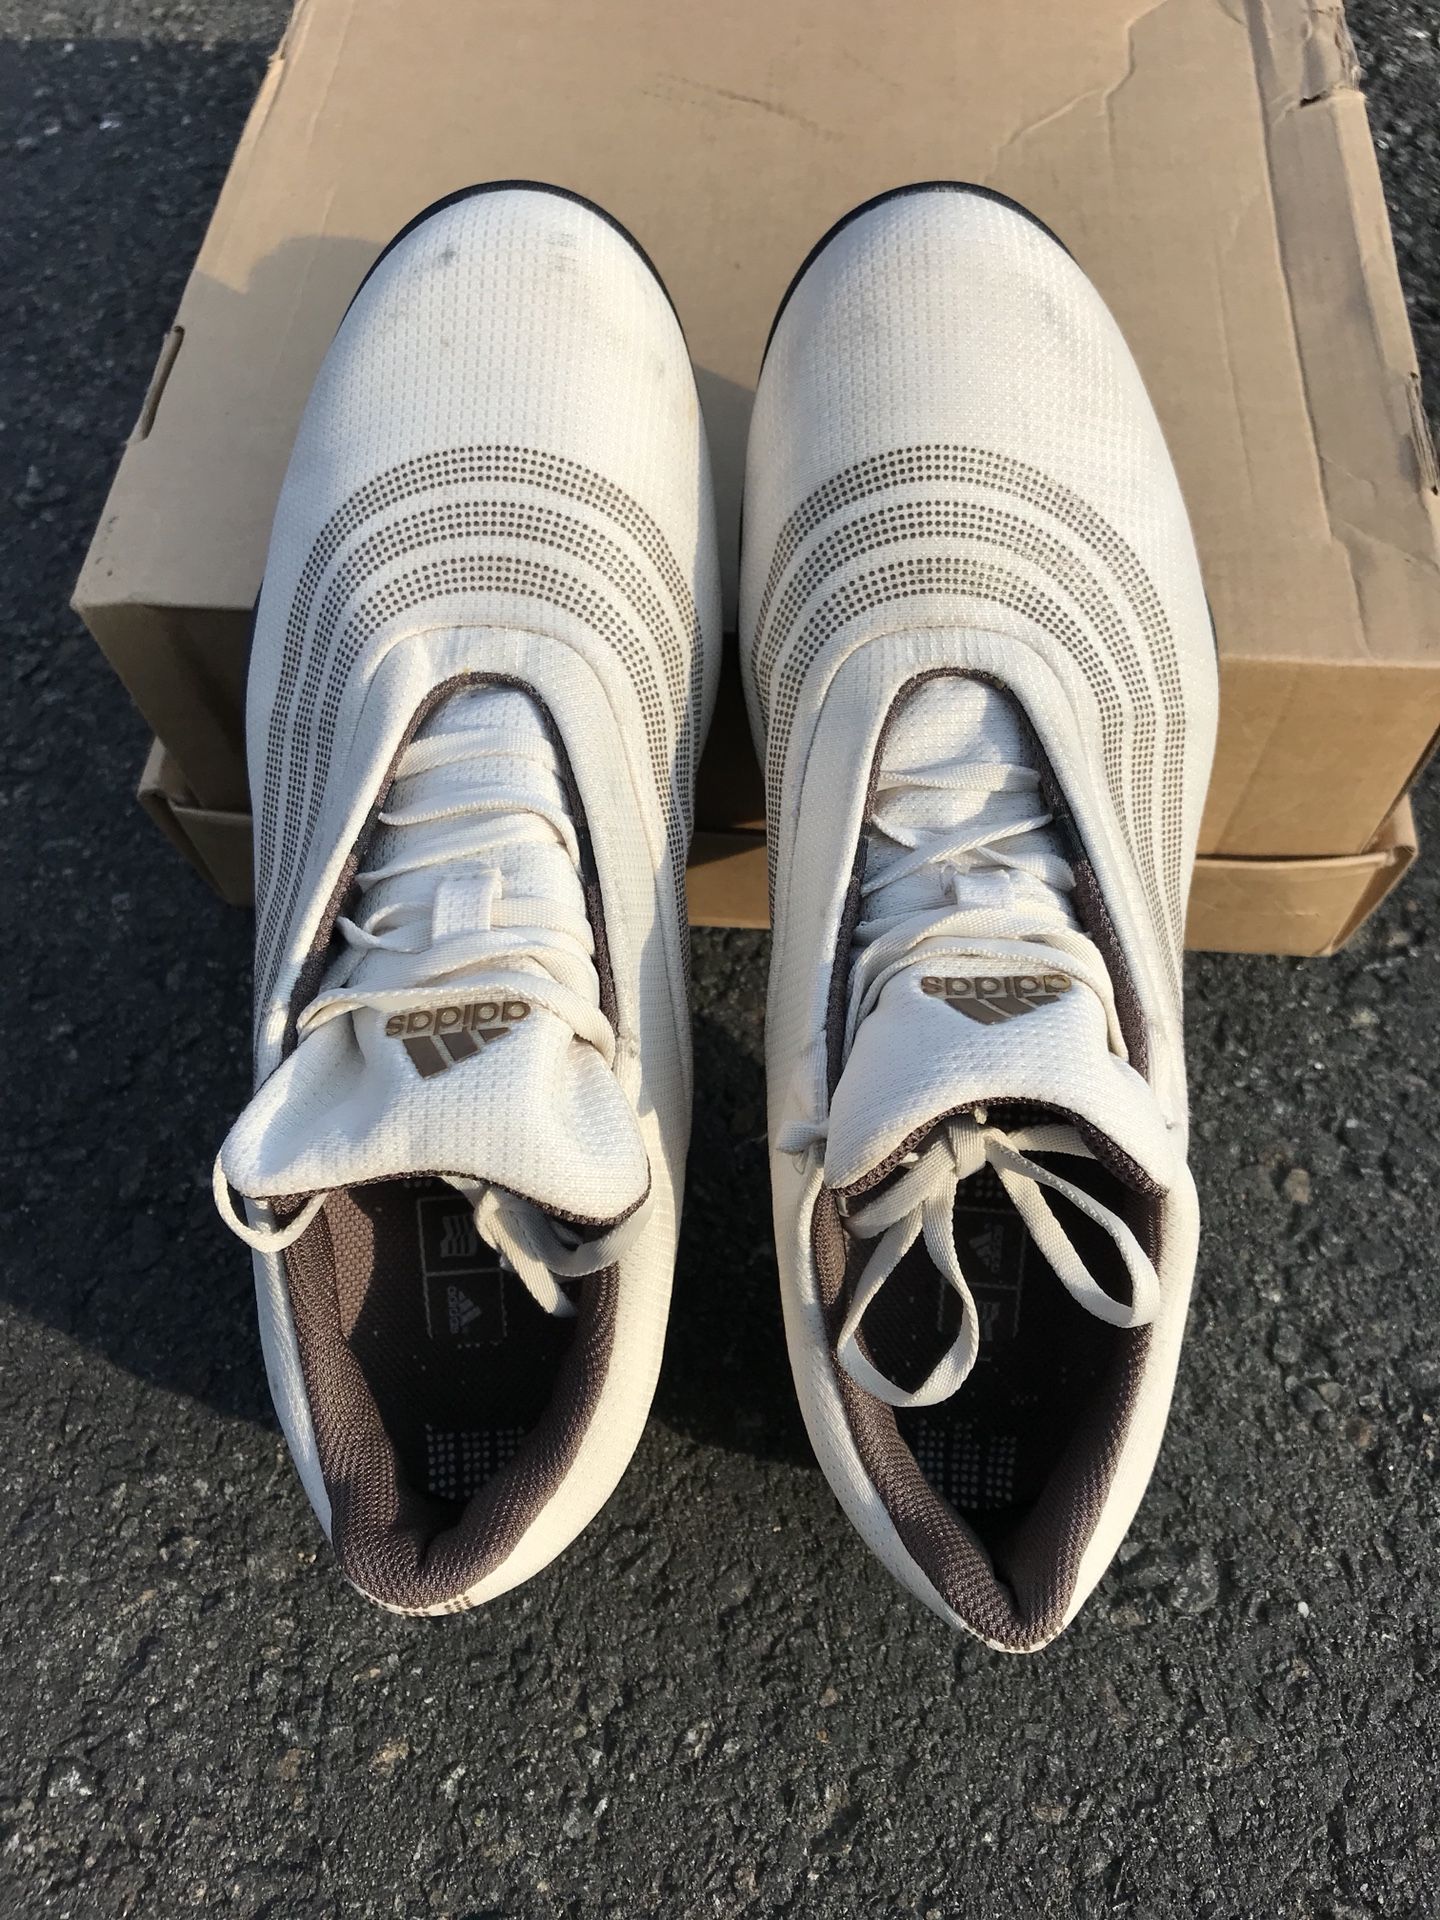 $50,Adidas golf shoe